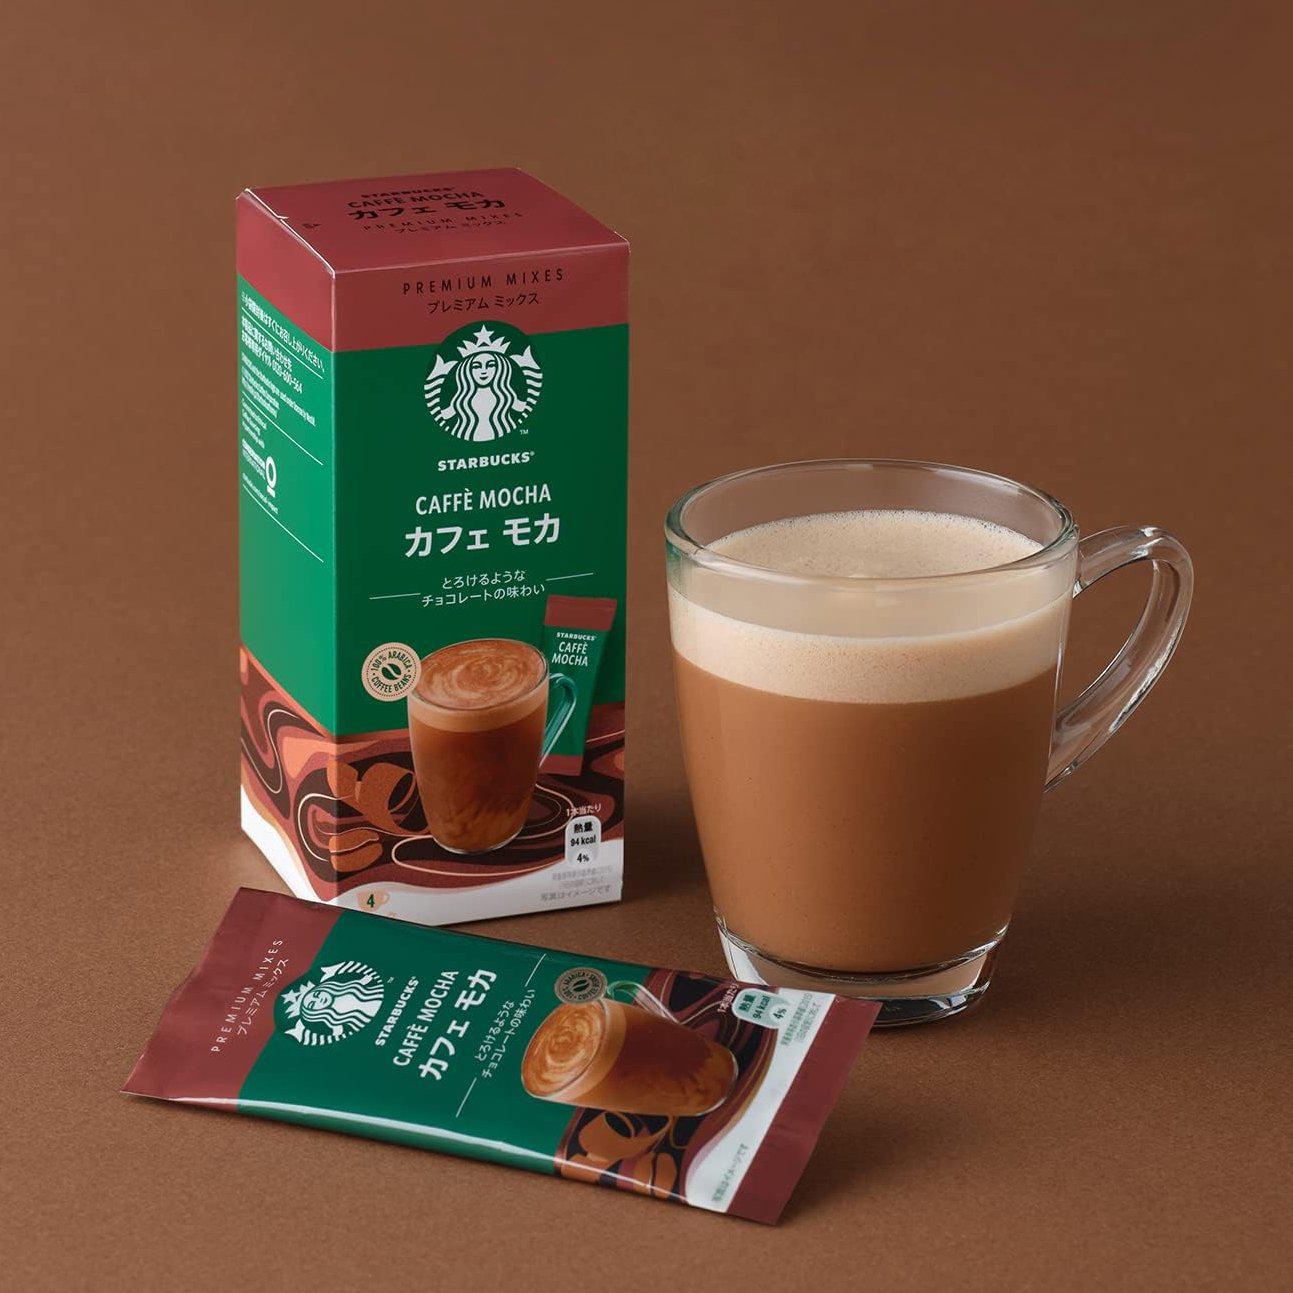 Starbucks Caffe Mocha Instant Coffee Mocha Mix (Pack of 3)